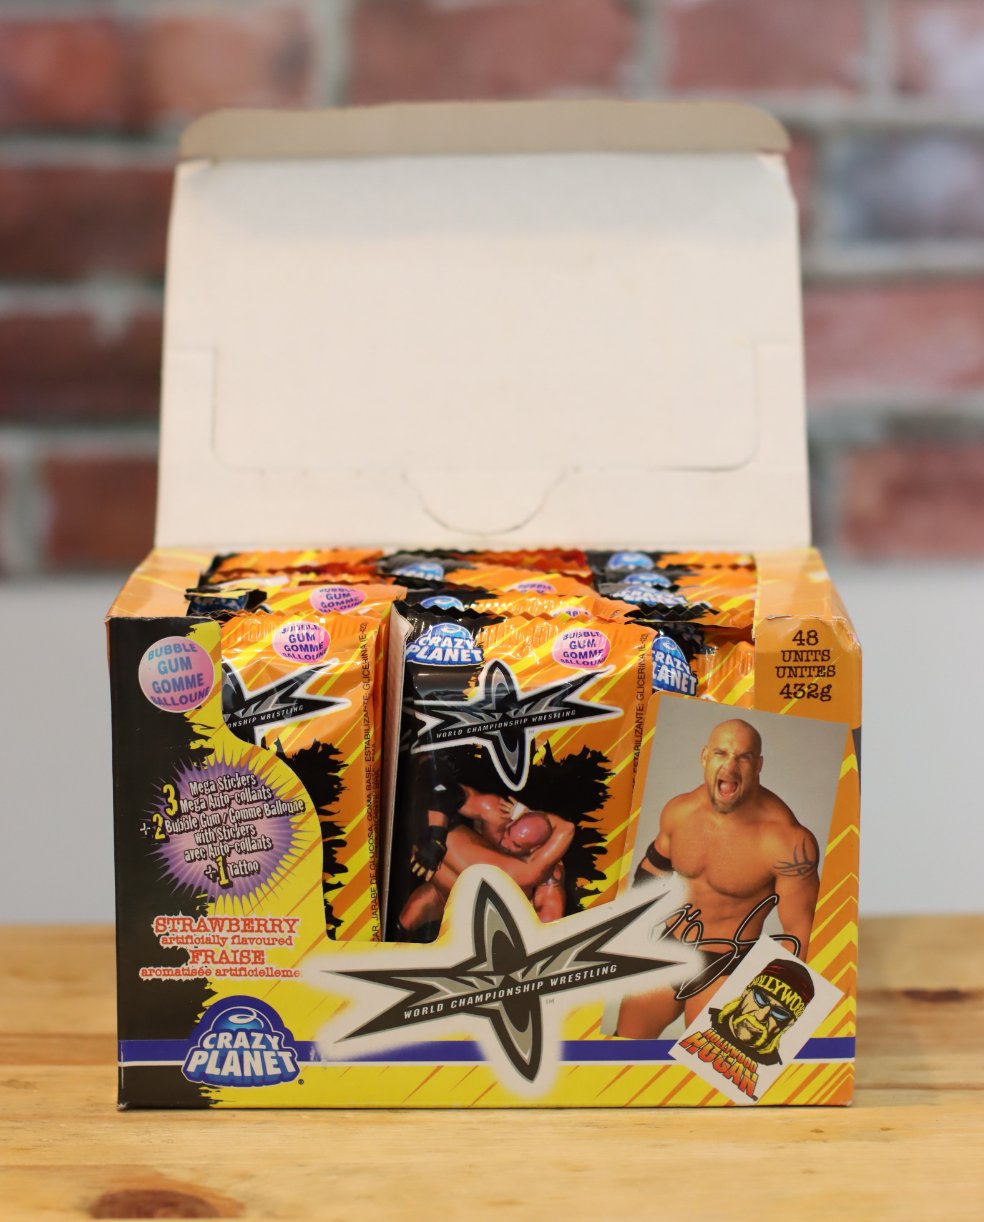 1998 Crazy Planet WCW NWO Wrestling Sticker Cards Hobby Wax Box (48 Packs)